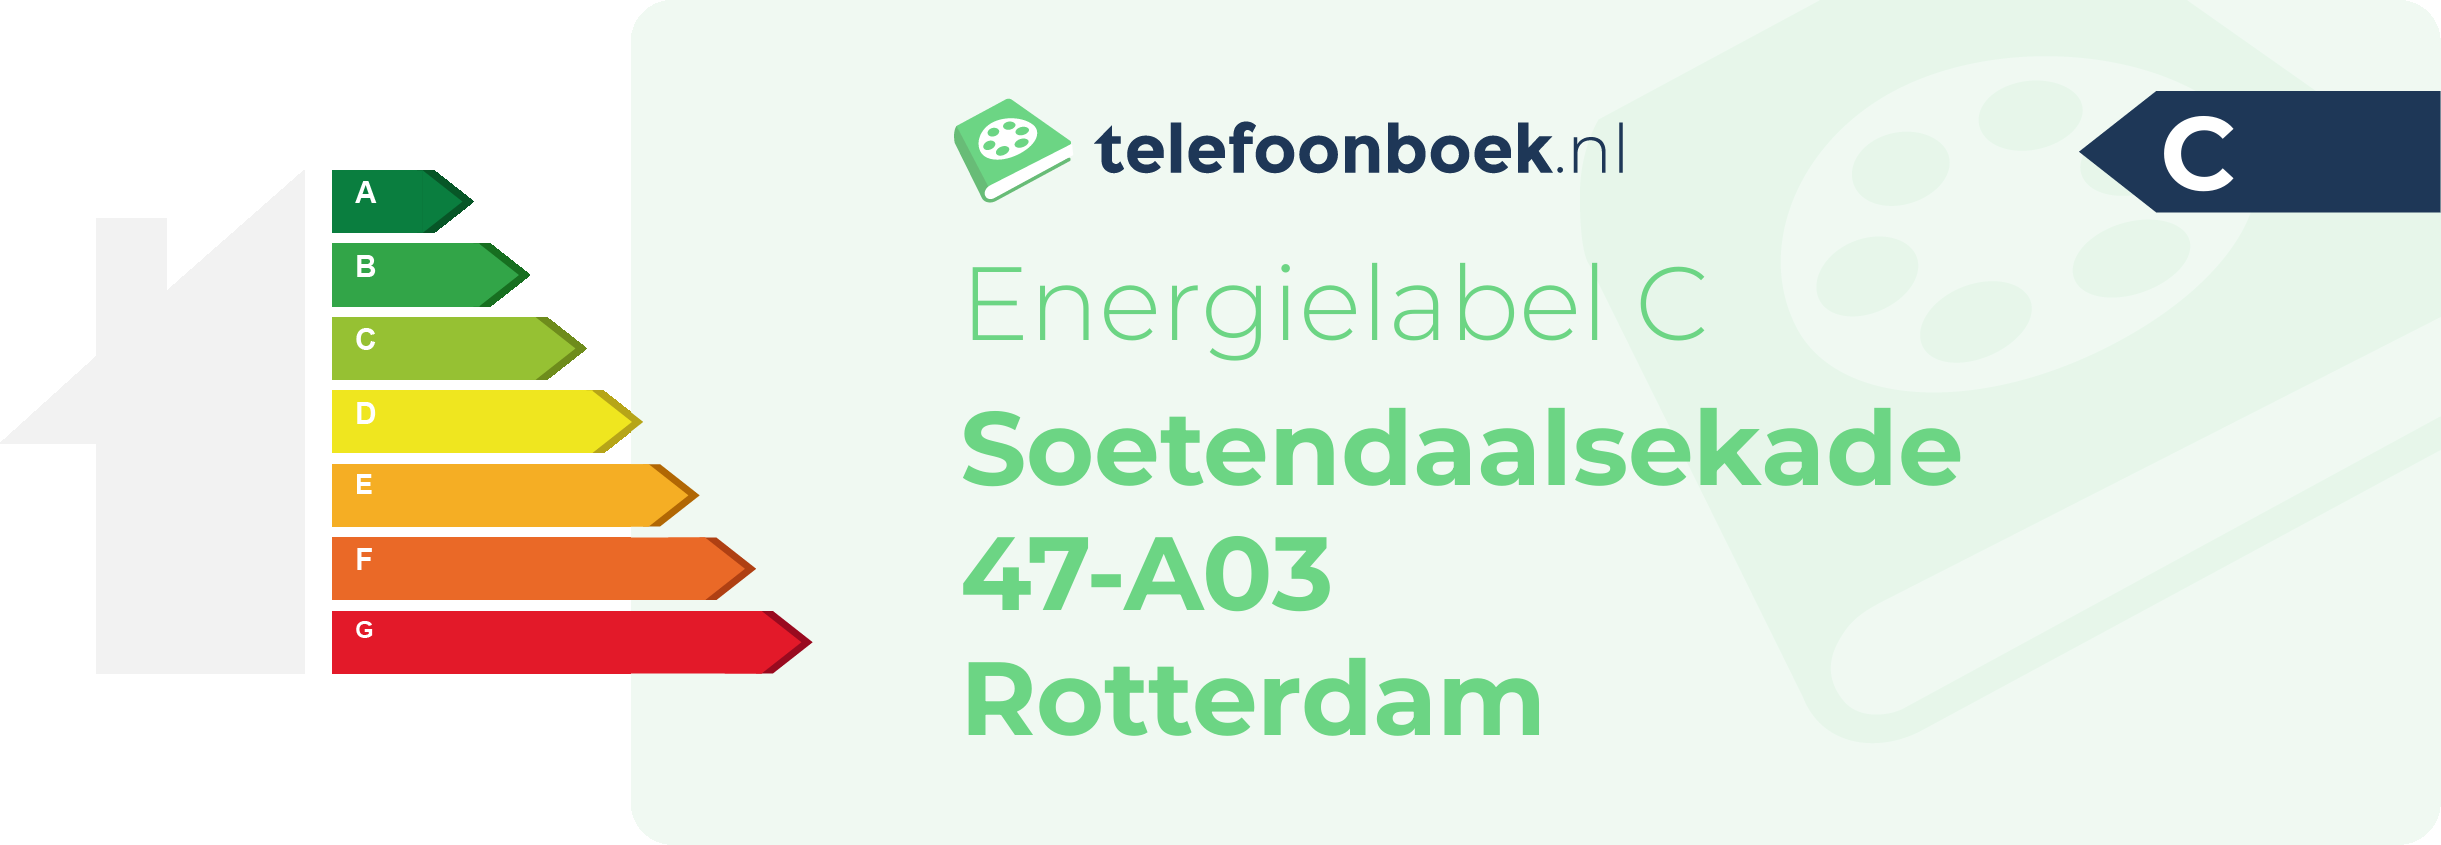 Energielabel Soetendaalsekade 47-A03 Rotterdam